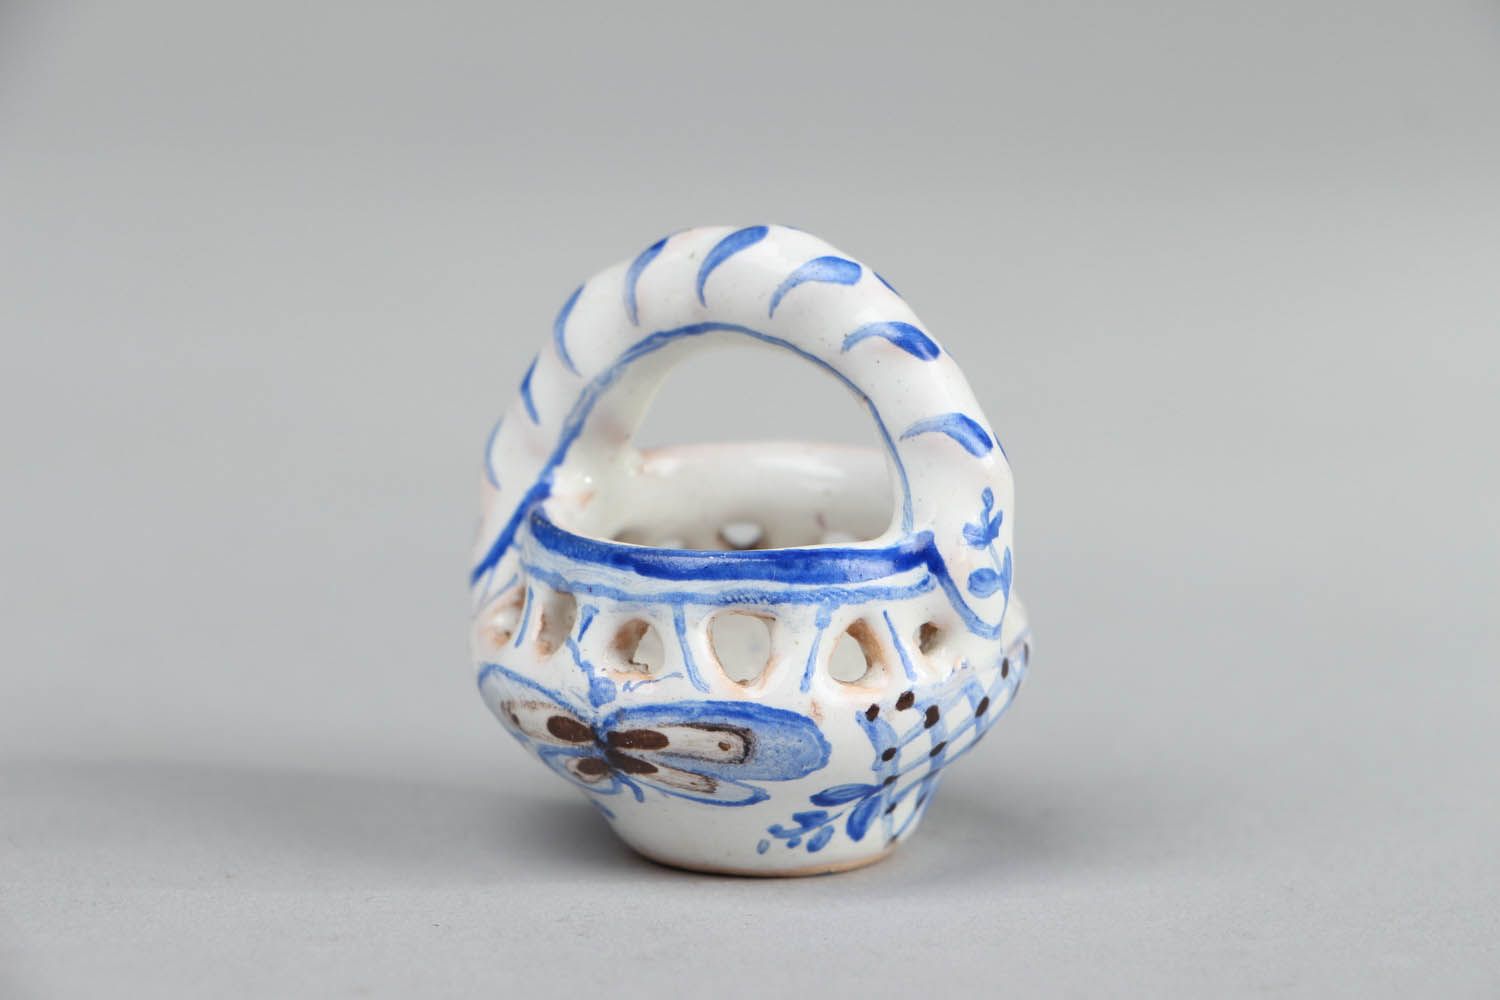 1,5-inch white and blue handmade basket vase for shelf décor 0,04 lb photo 1